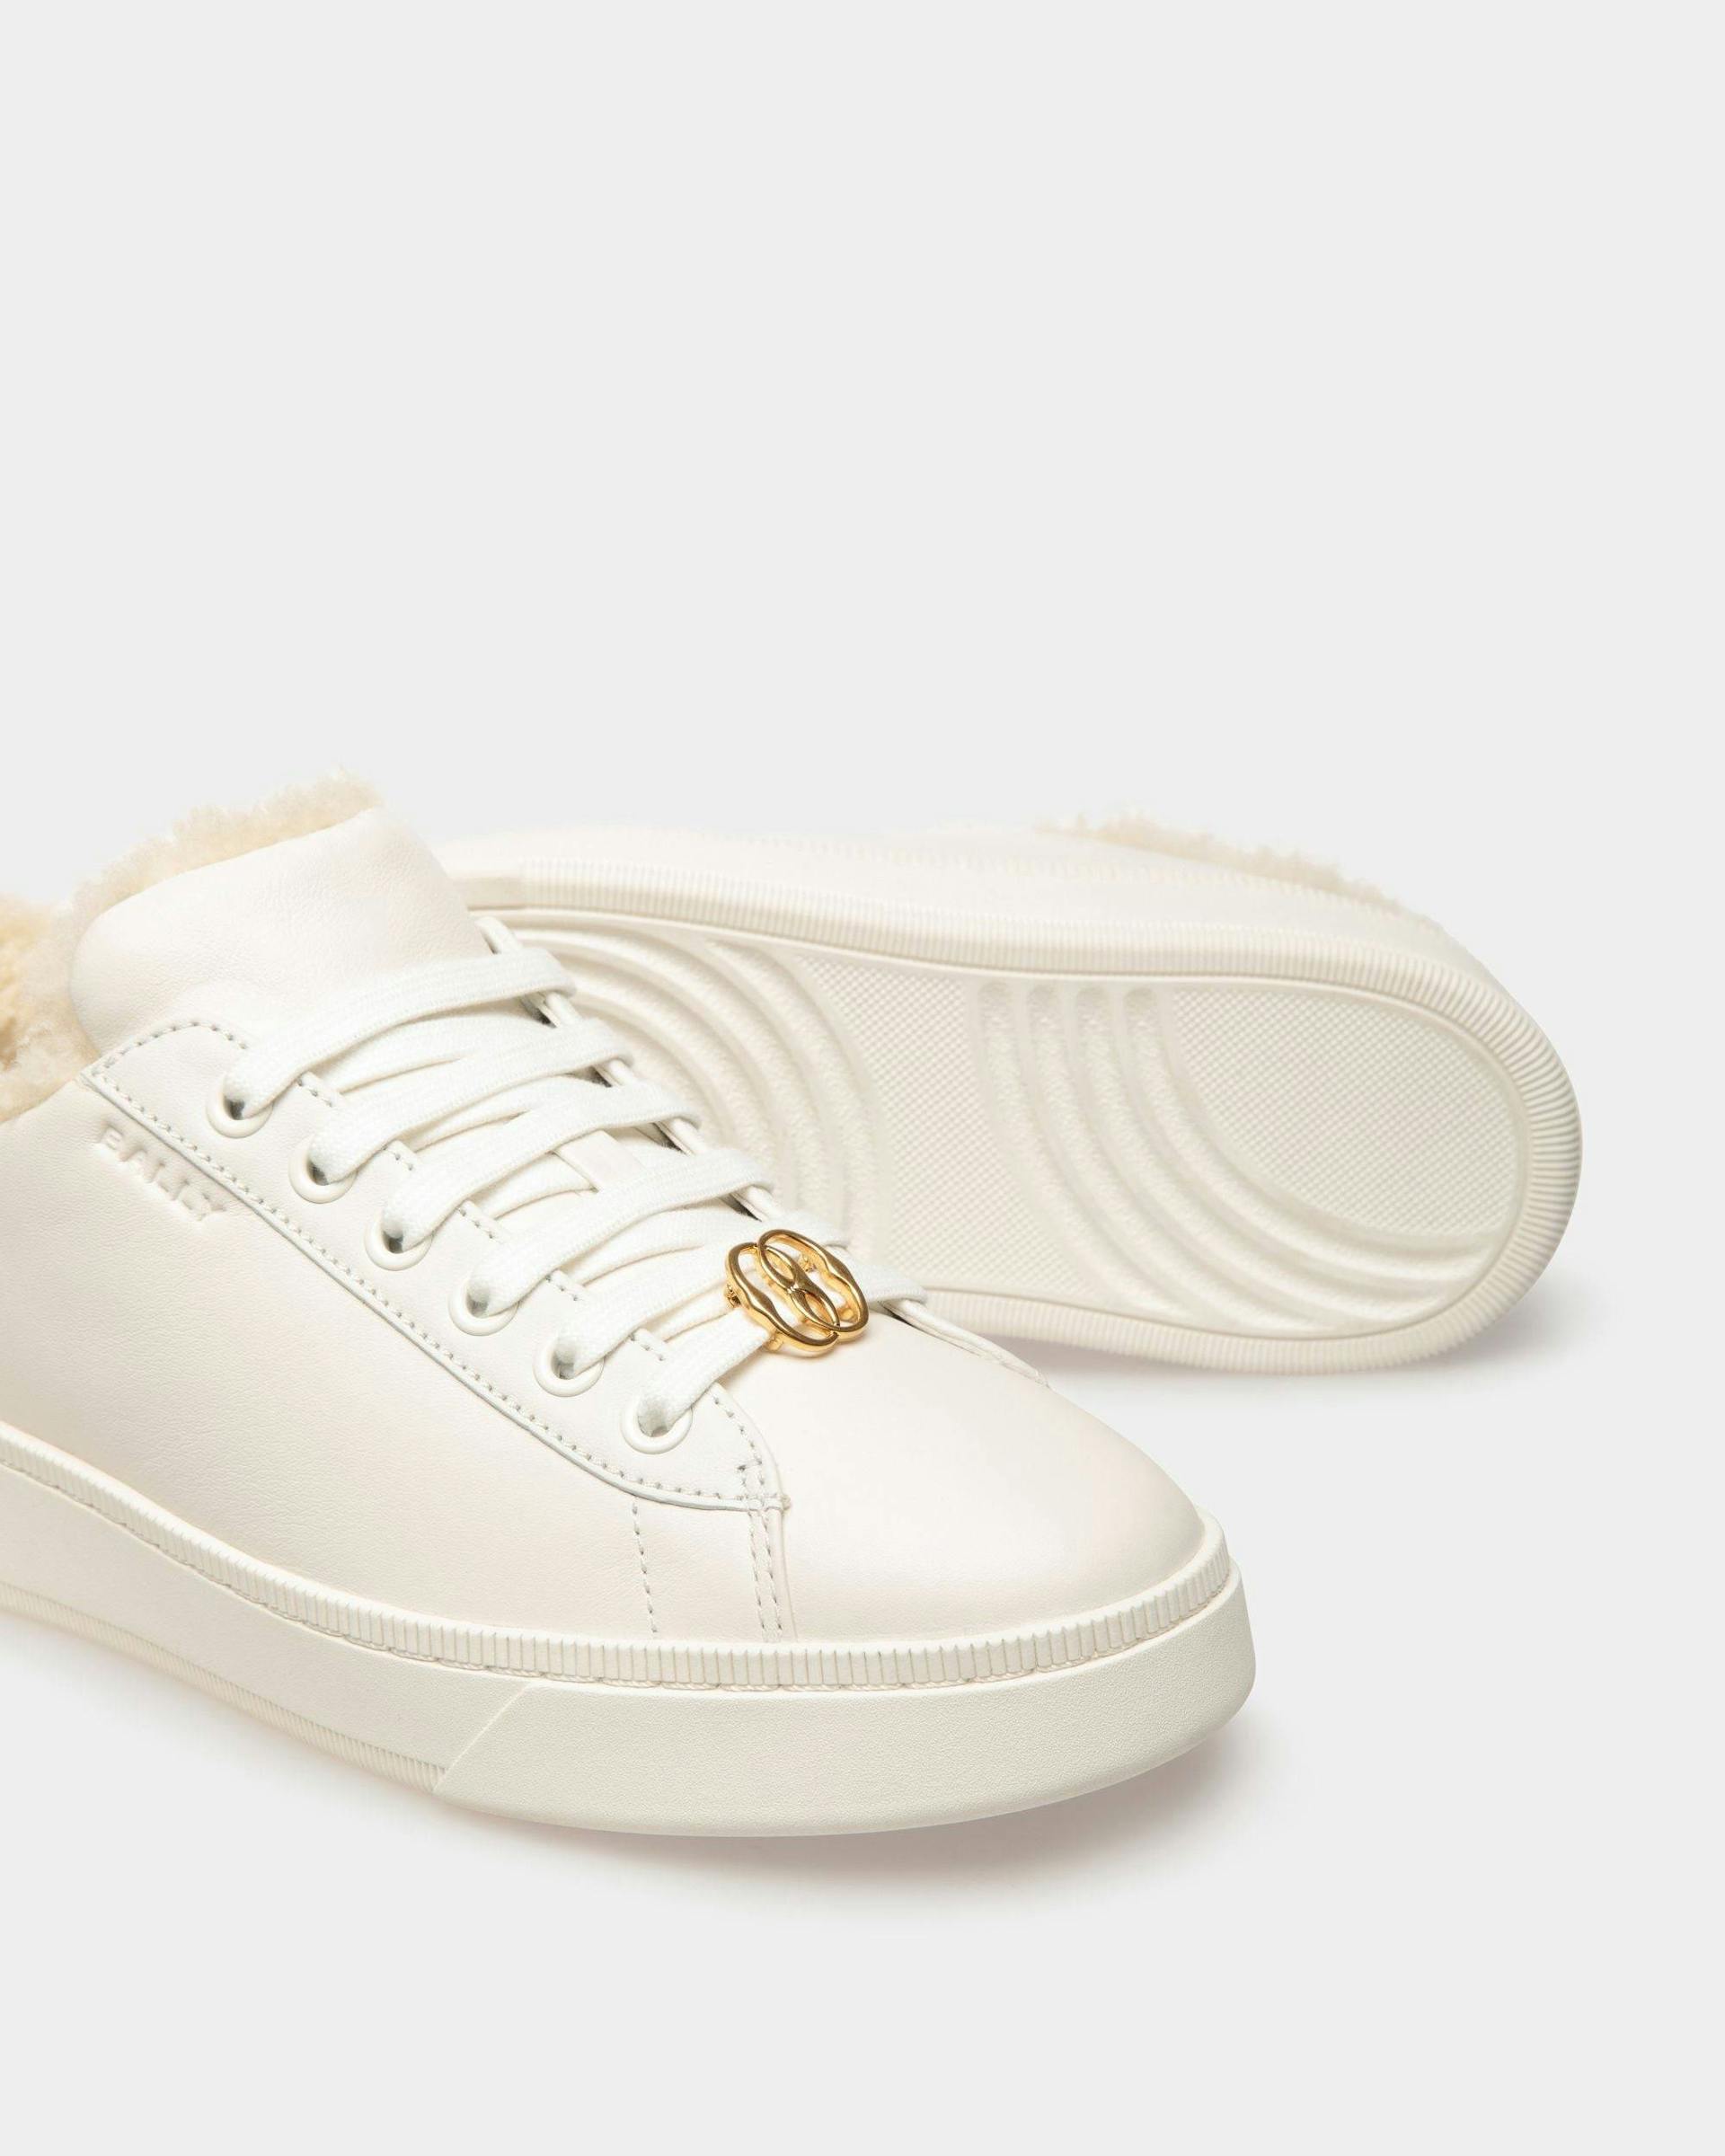 Women's Raise Sneakers In White Leather | Bally | Still Life Detail